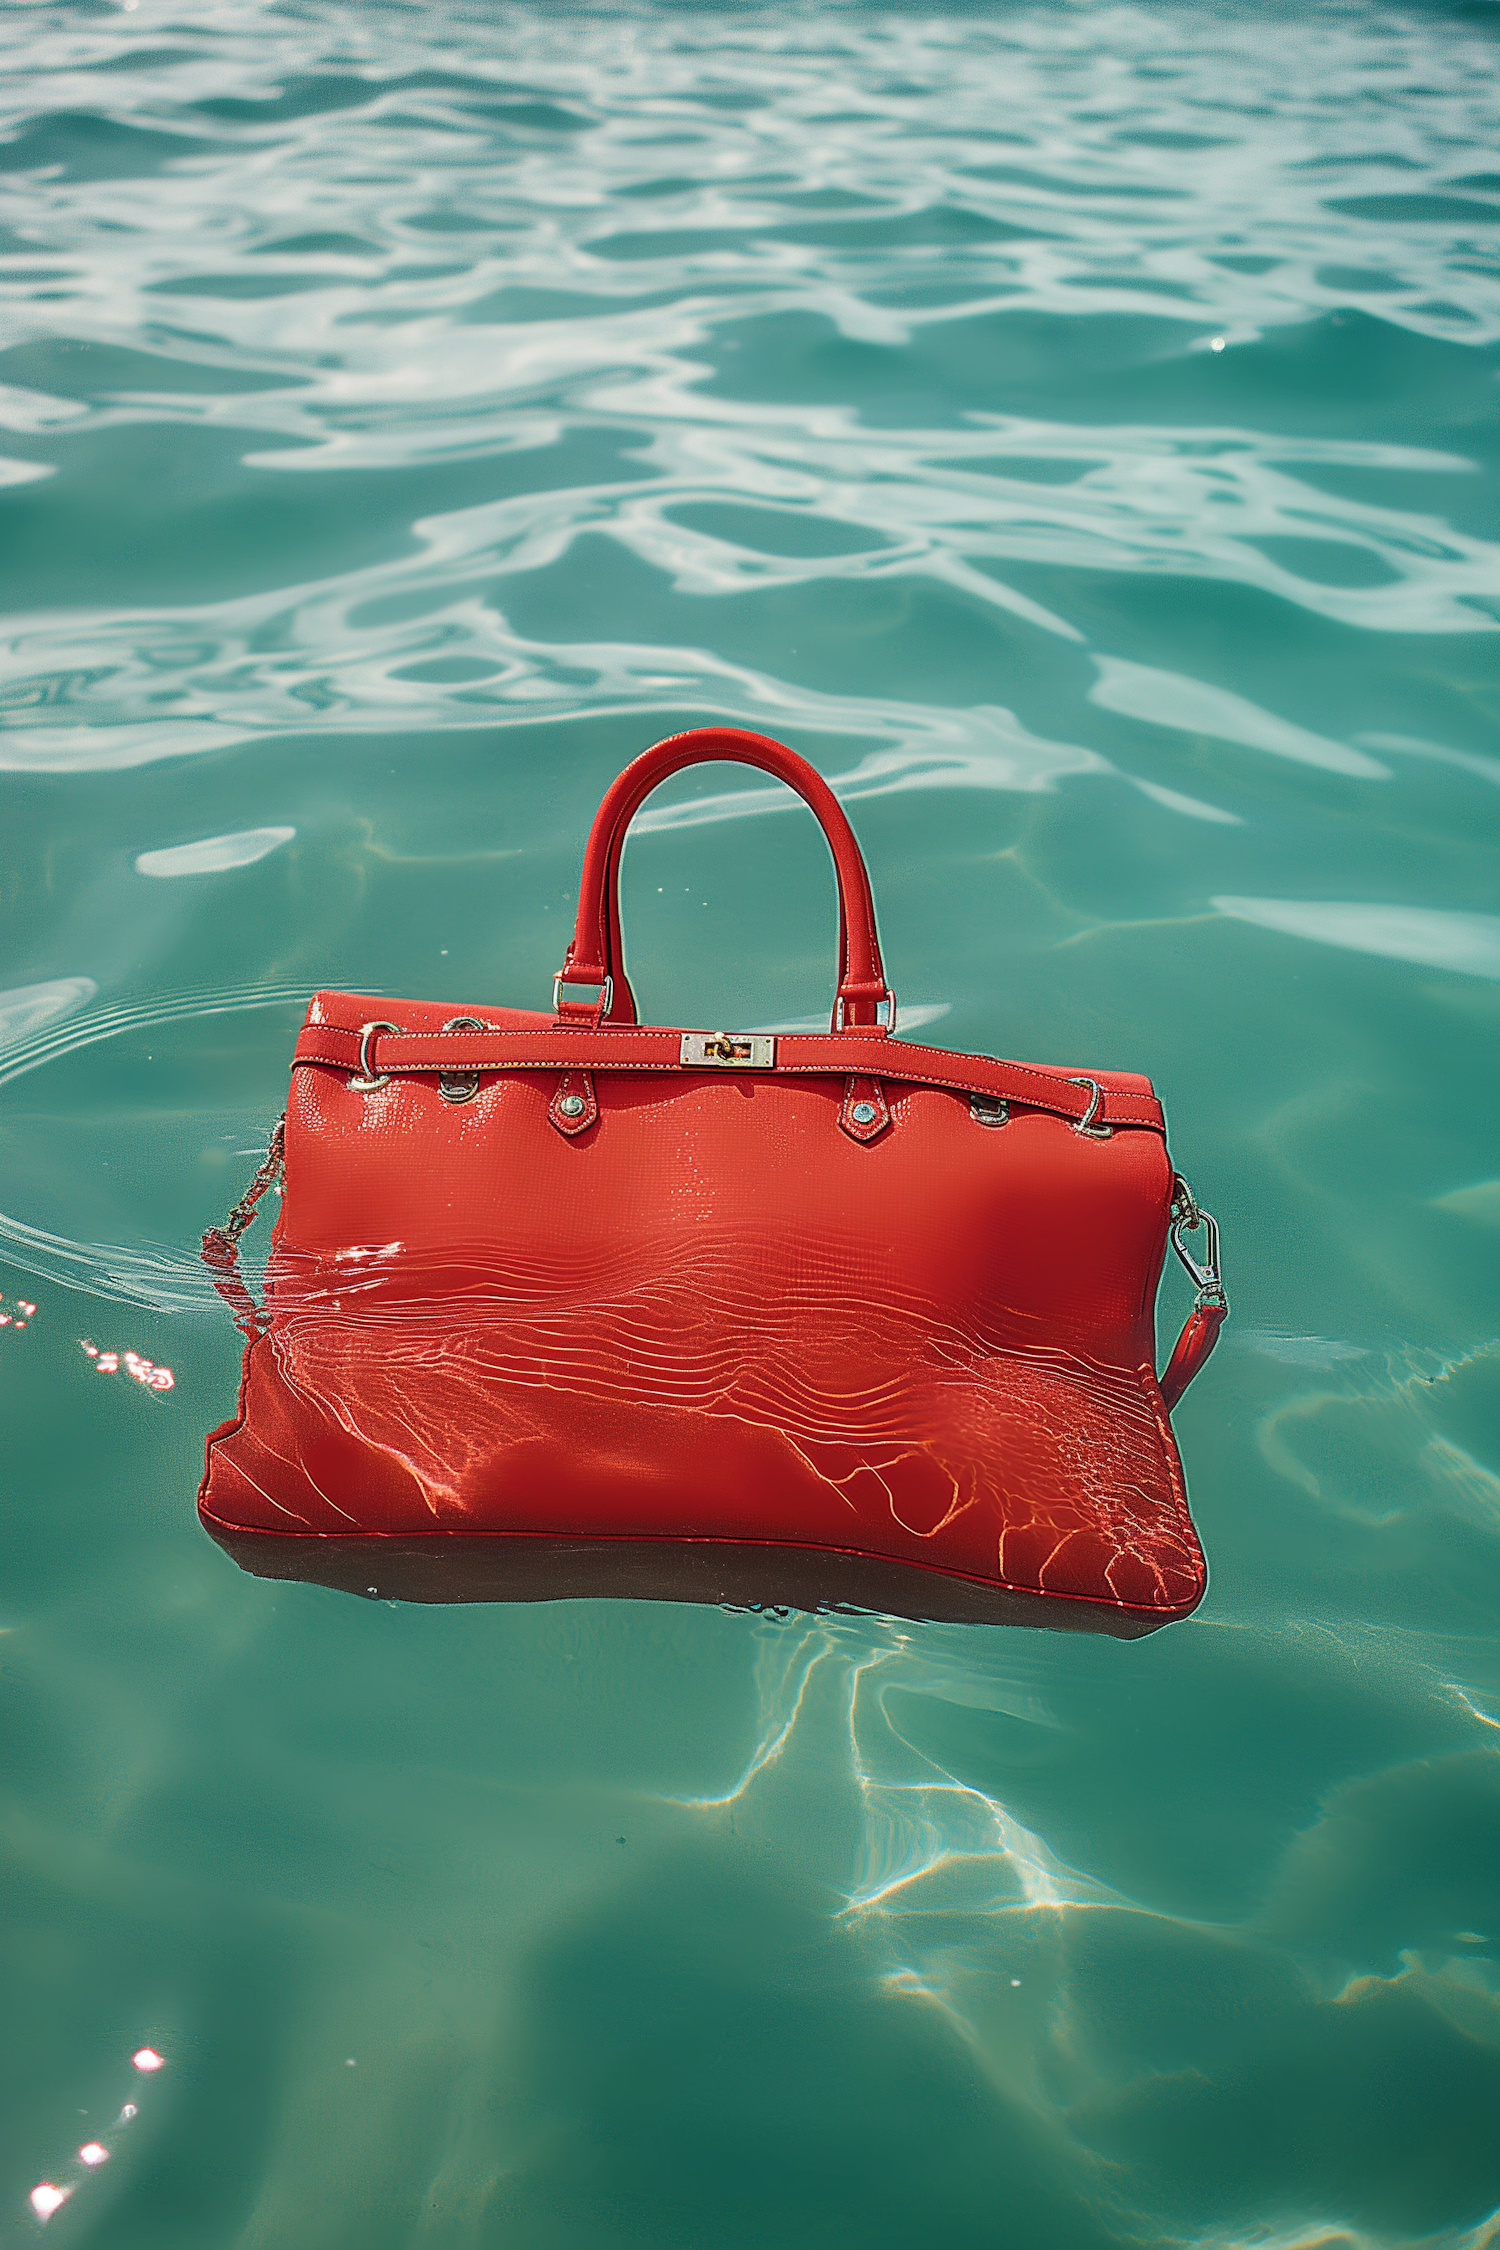 Red Handbag in Turquoise Seawater